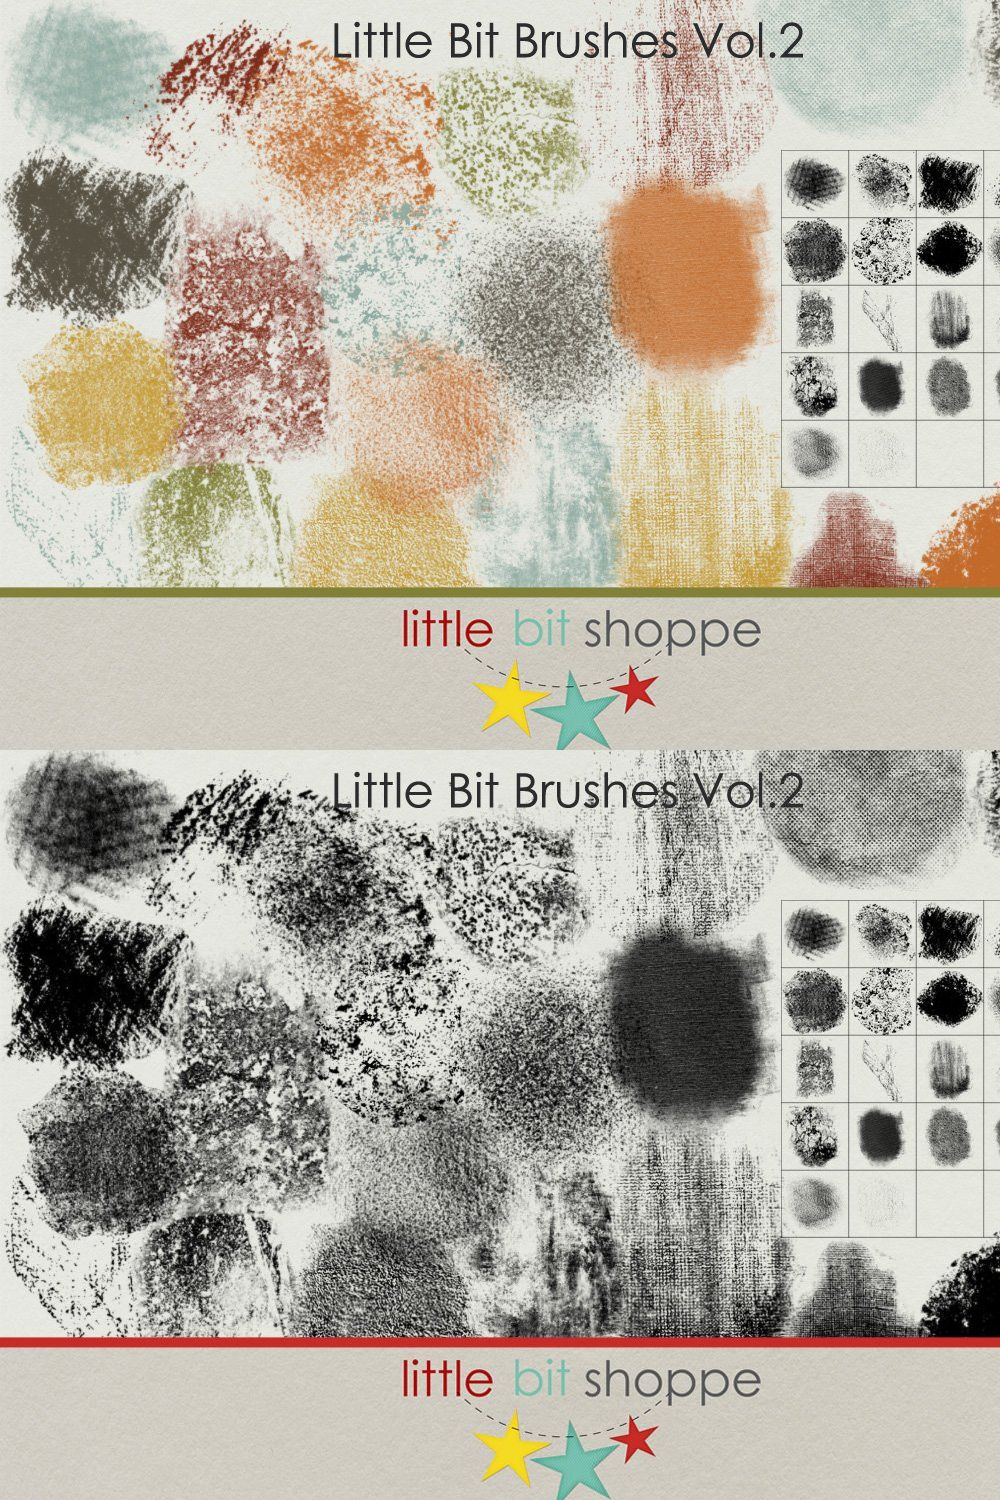 Little Bit Brushes Vol.2 pinterest preview image.